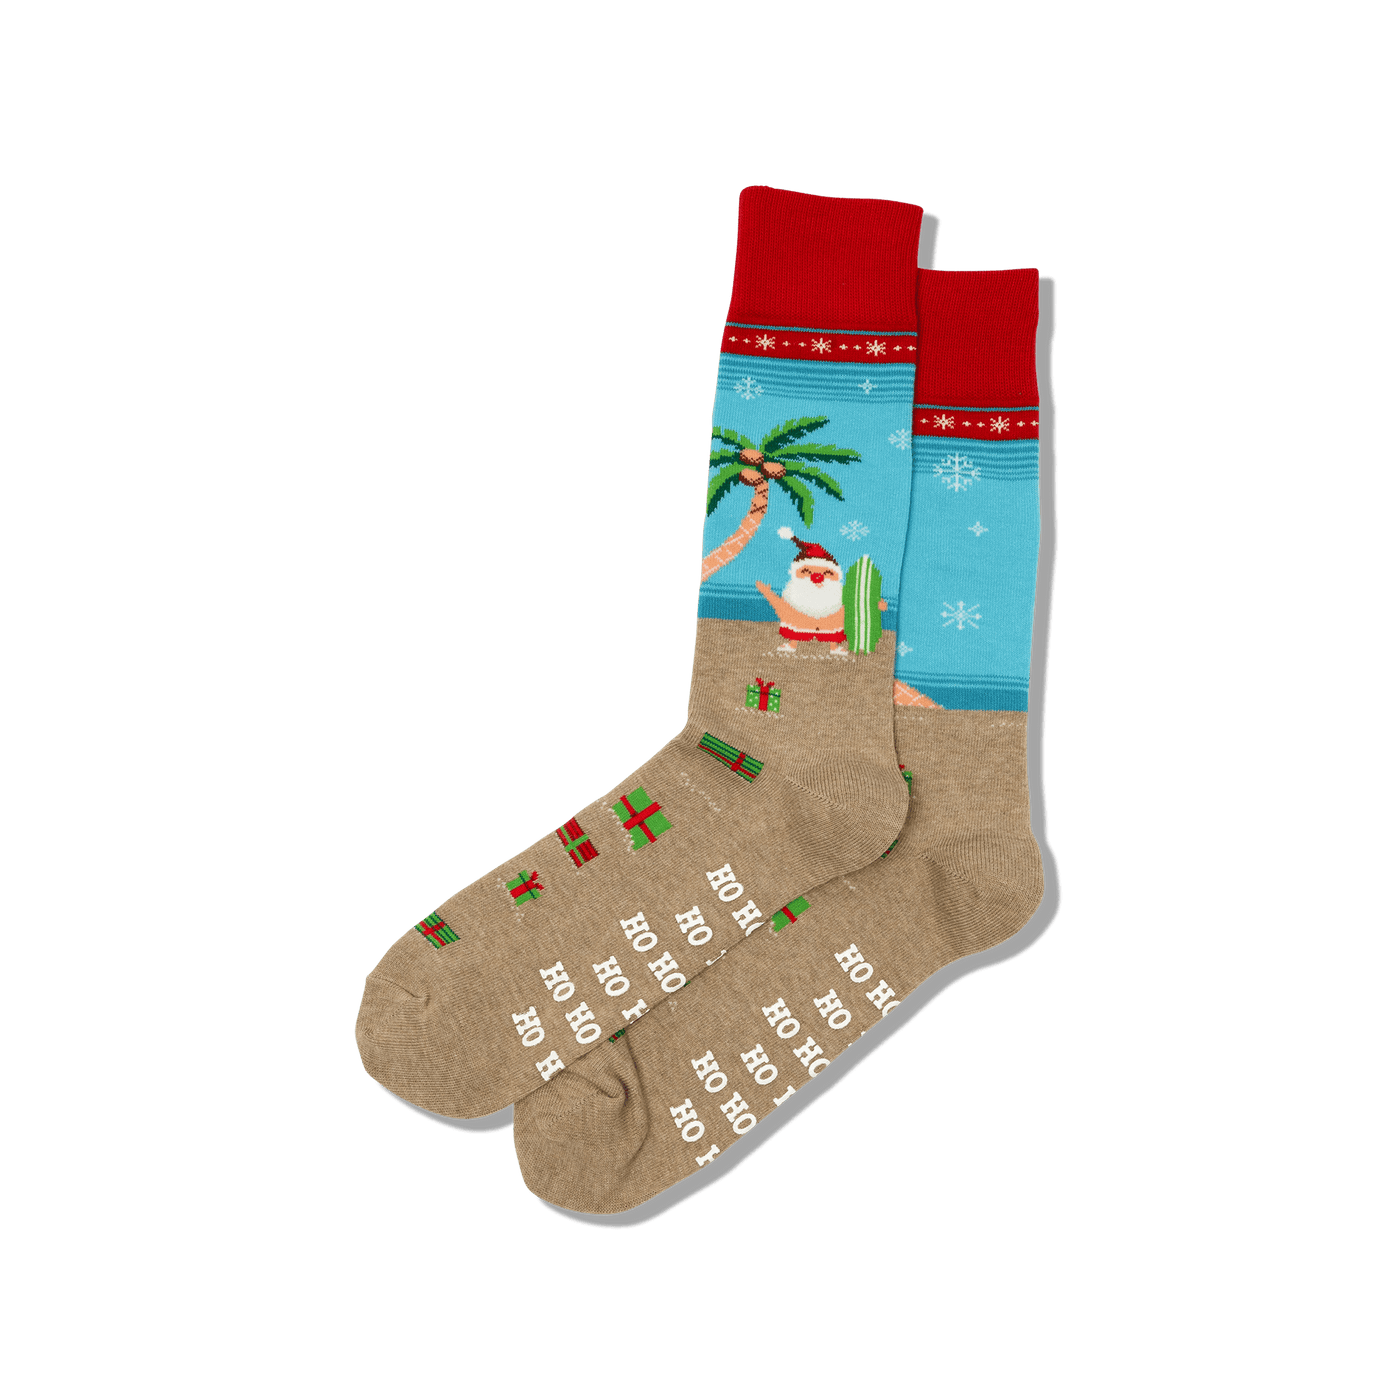 "Surfing Santa" Crew Socks by Hot Sox - Large